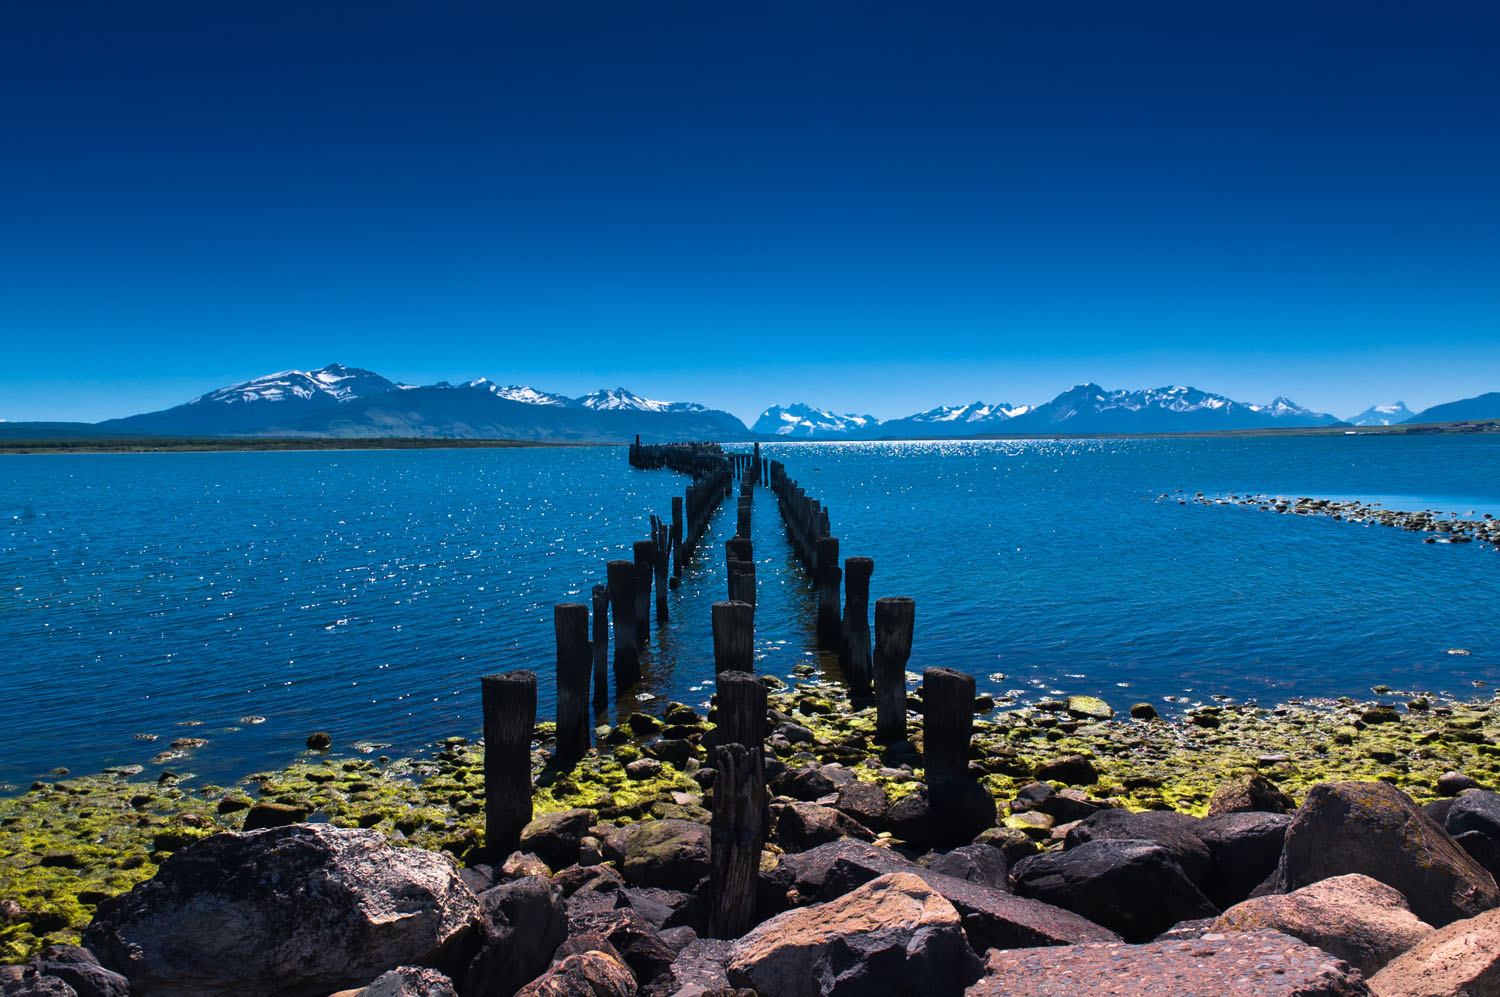 Llanquihue Lake, Chile